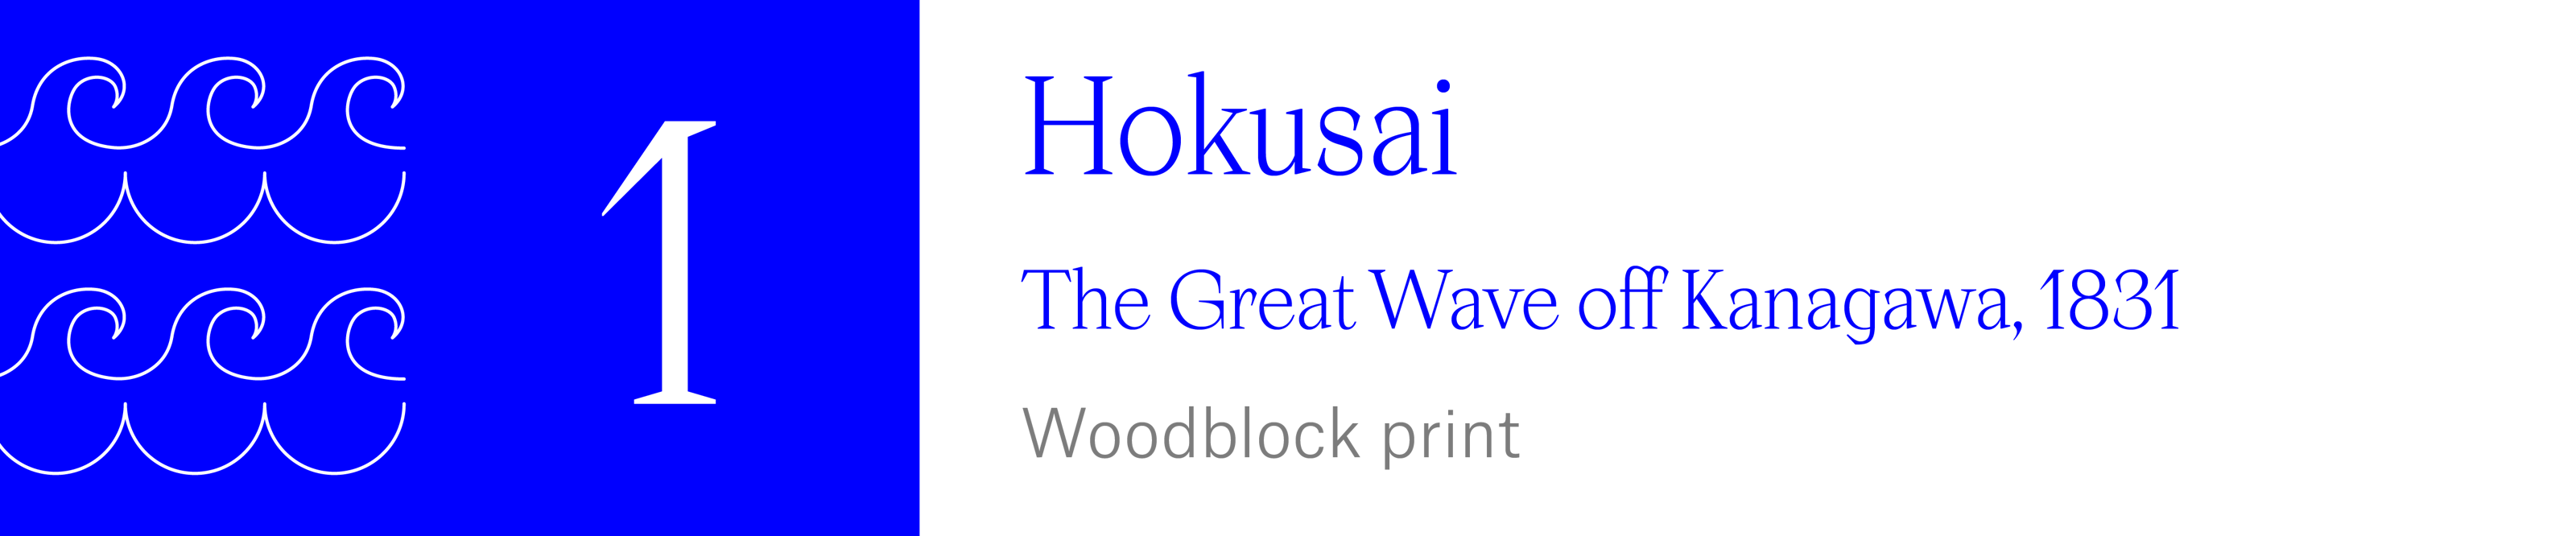 The Wave (1) - Hokusai - The Great Wave off Kanagawa, 1831, Woodblock print